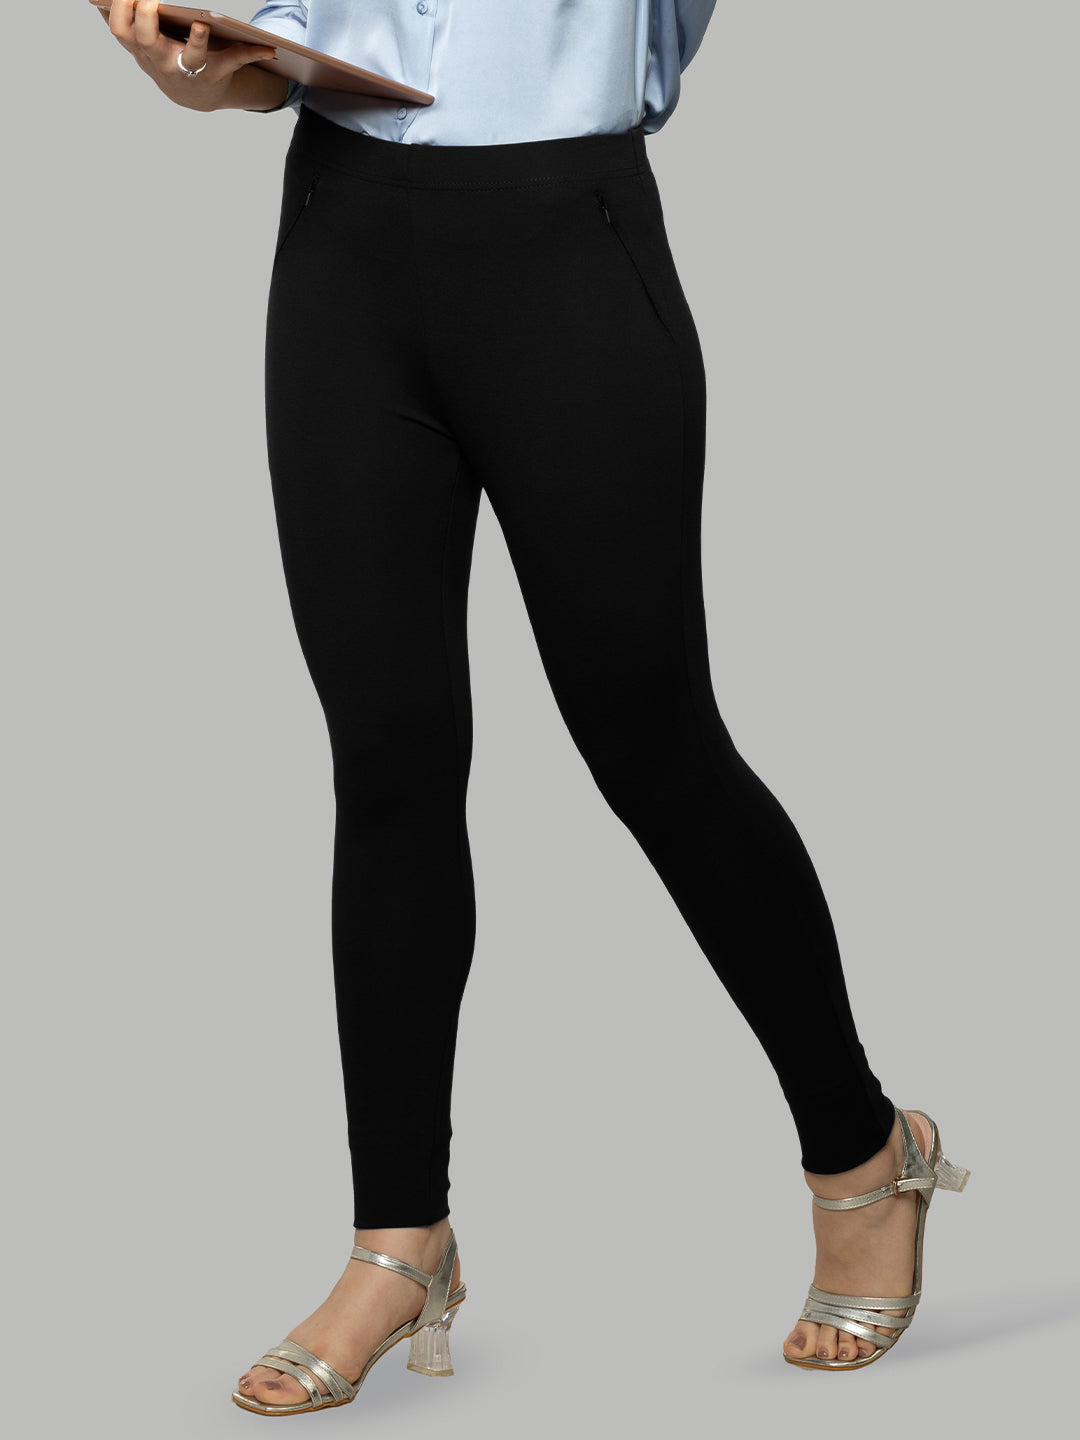 Bodysuit Dress with Black Legging – laroswimwear